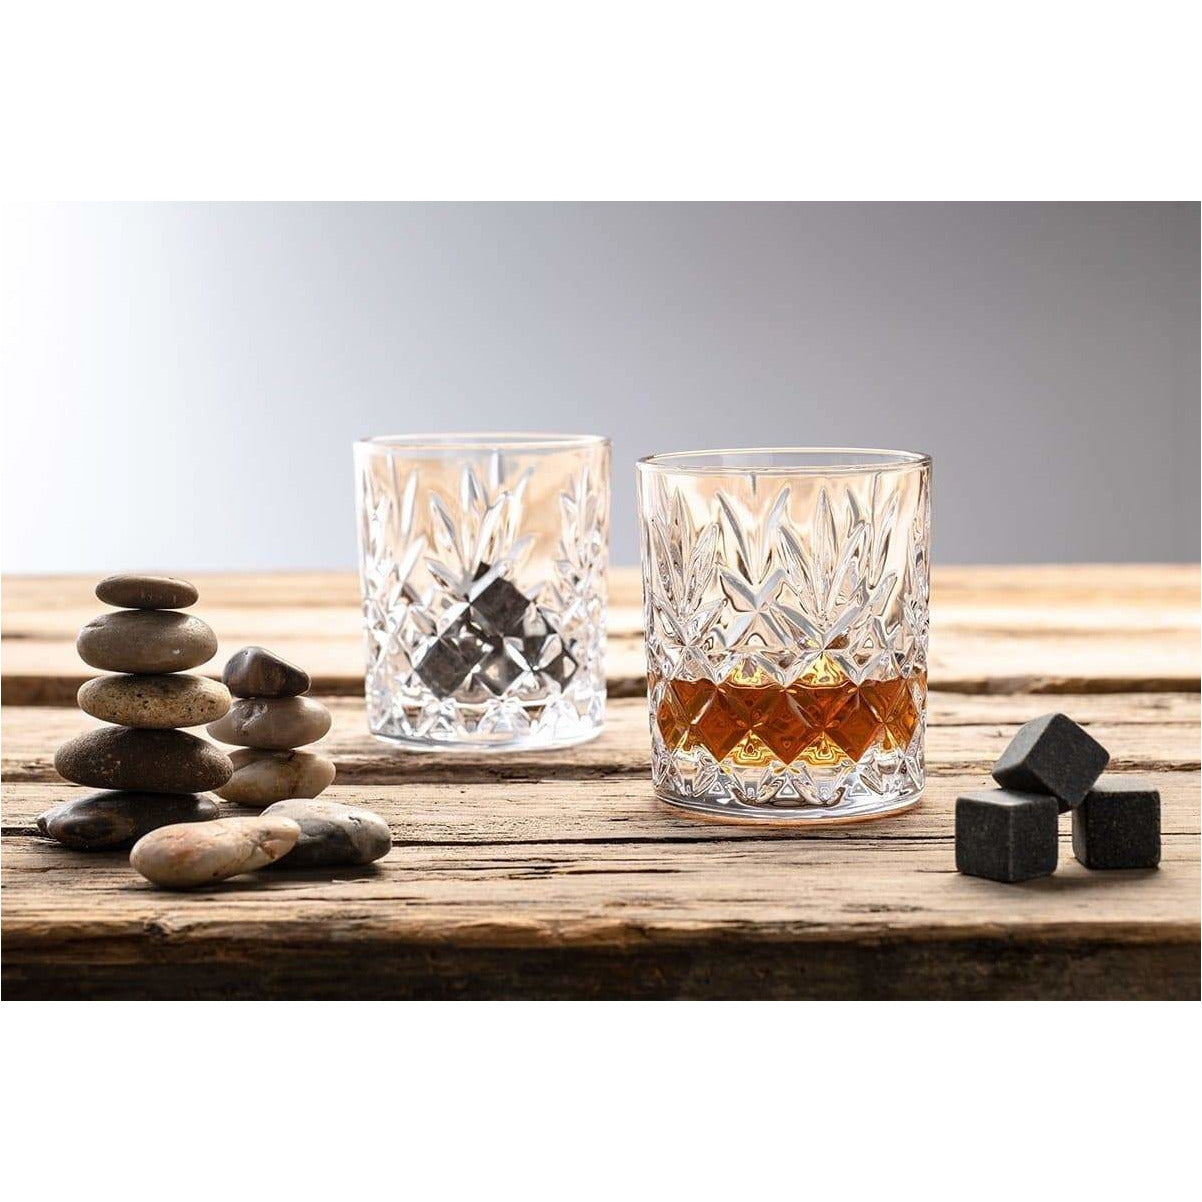 Renmore Whiskey Glass Pair - Galway Irish Crystal